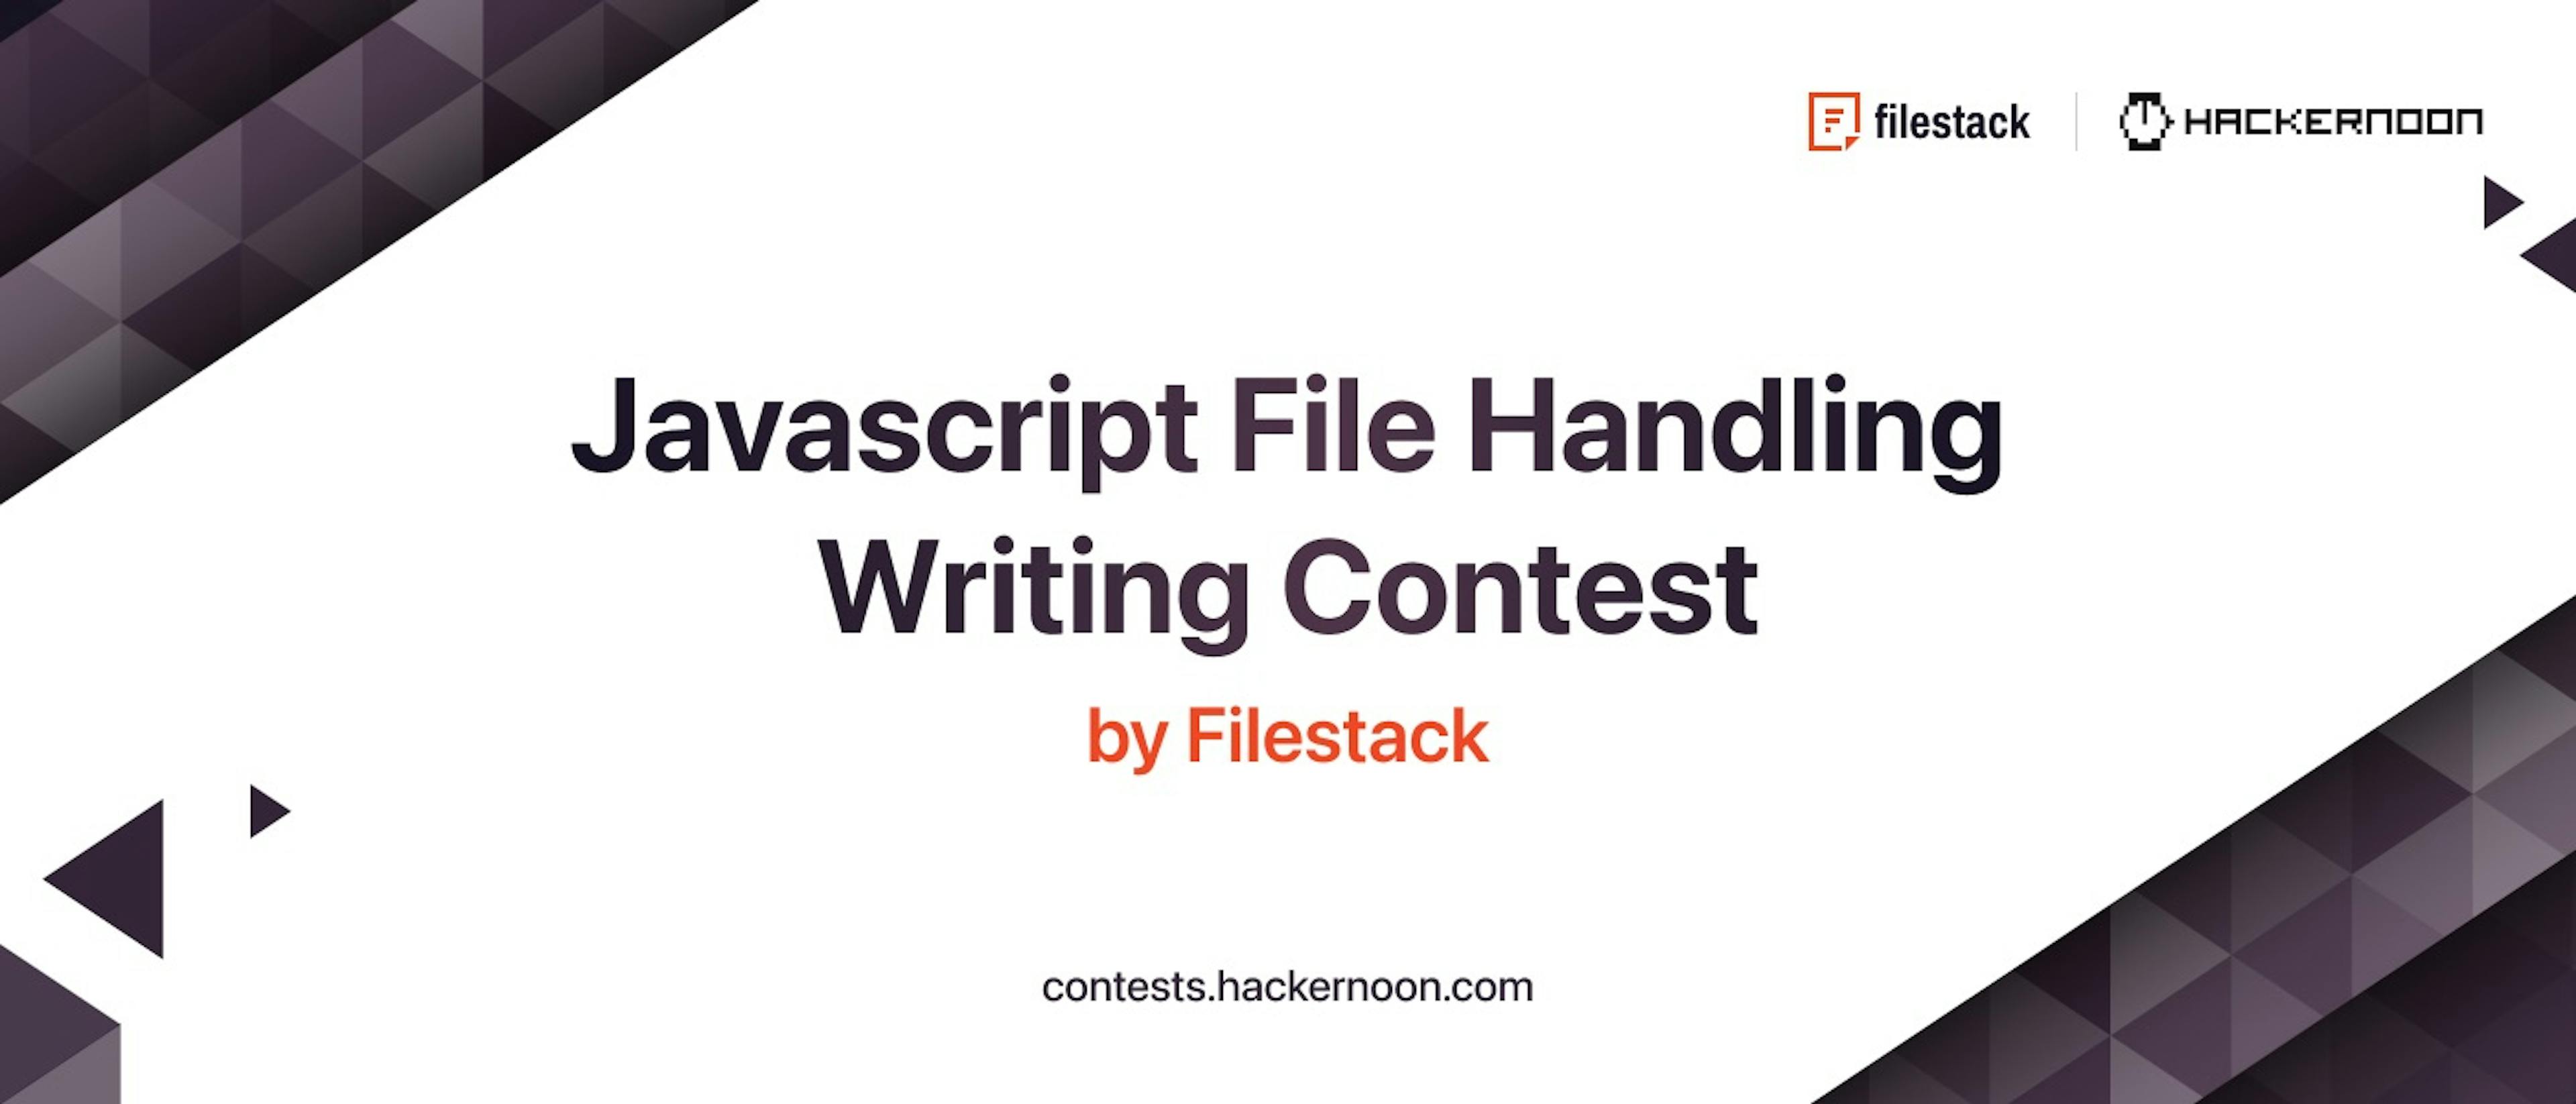 featured image - Concurso de Escrita de Manipulação de Arquivos Javascript por Filestack & HackerNoon